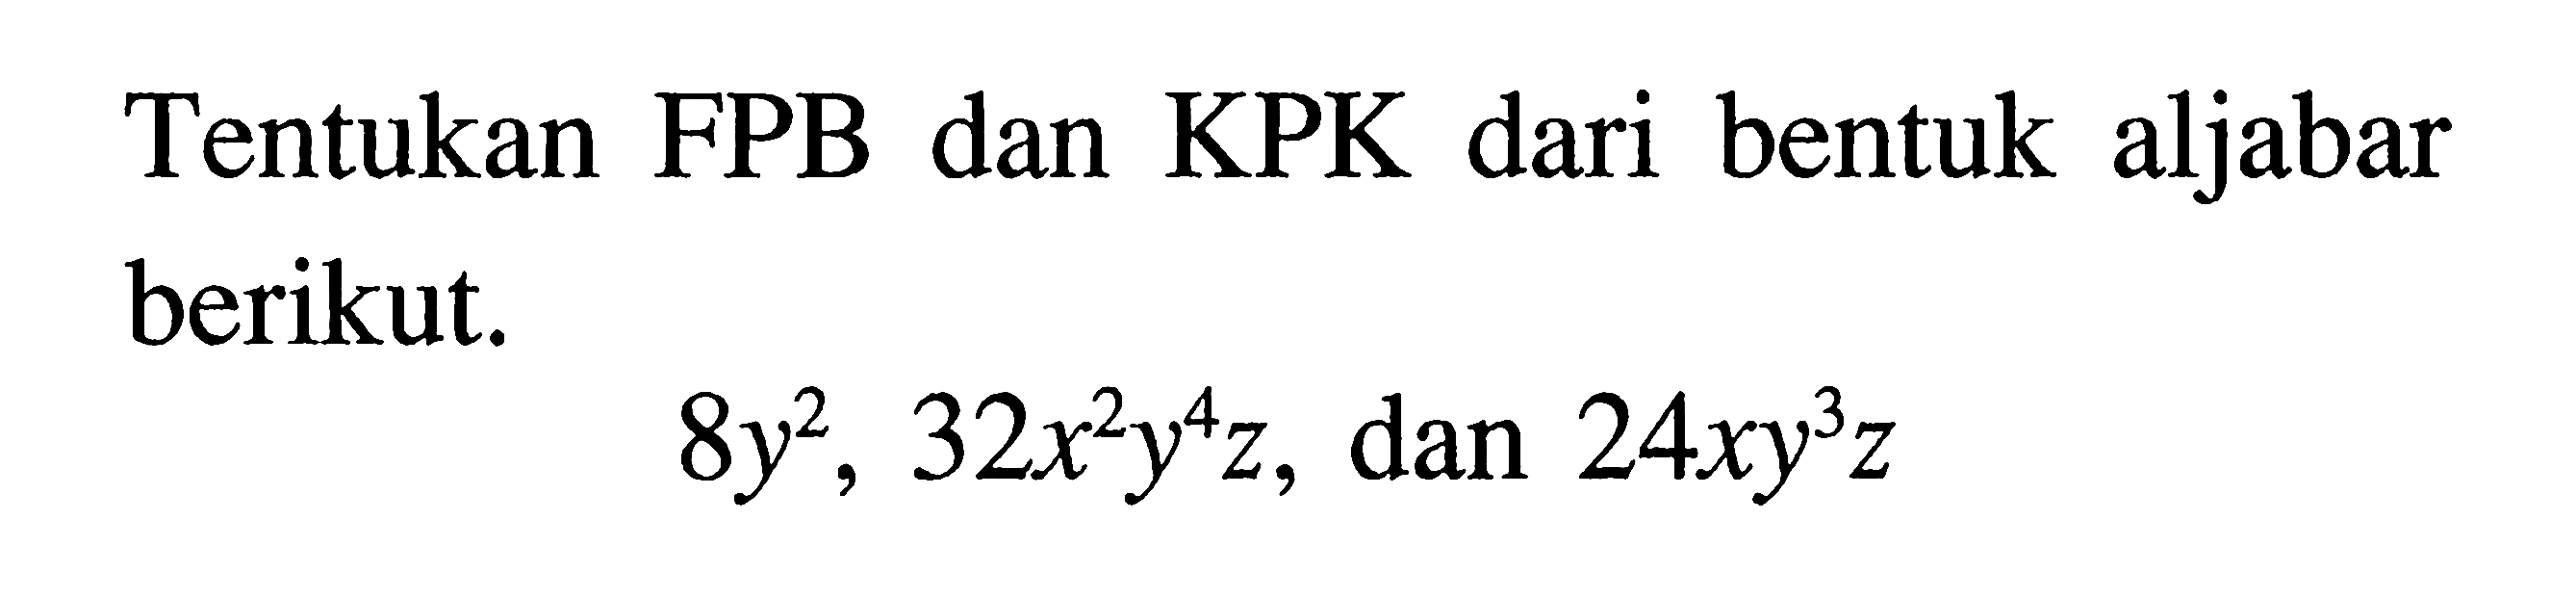 Tentukan FPB dan KPK dari bentuk aljabar berikut. 8y^2, 32x^2y^4z, dan 24xy^3z